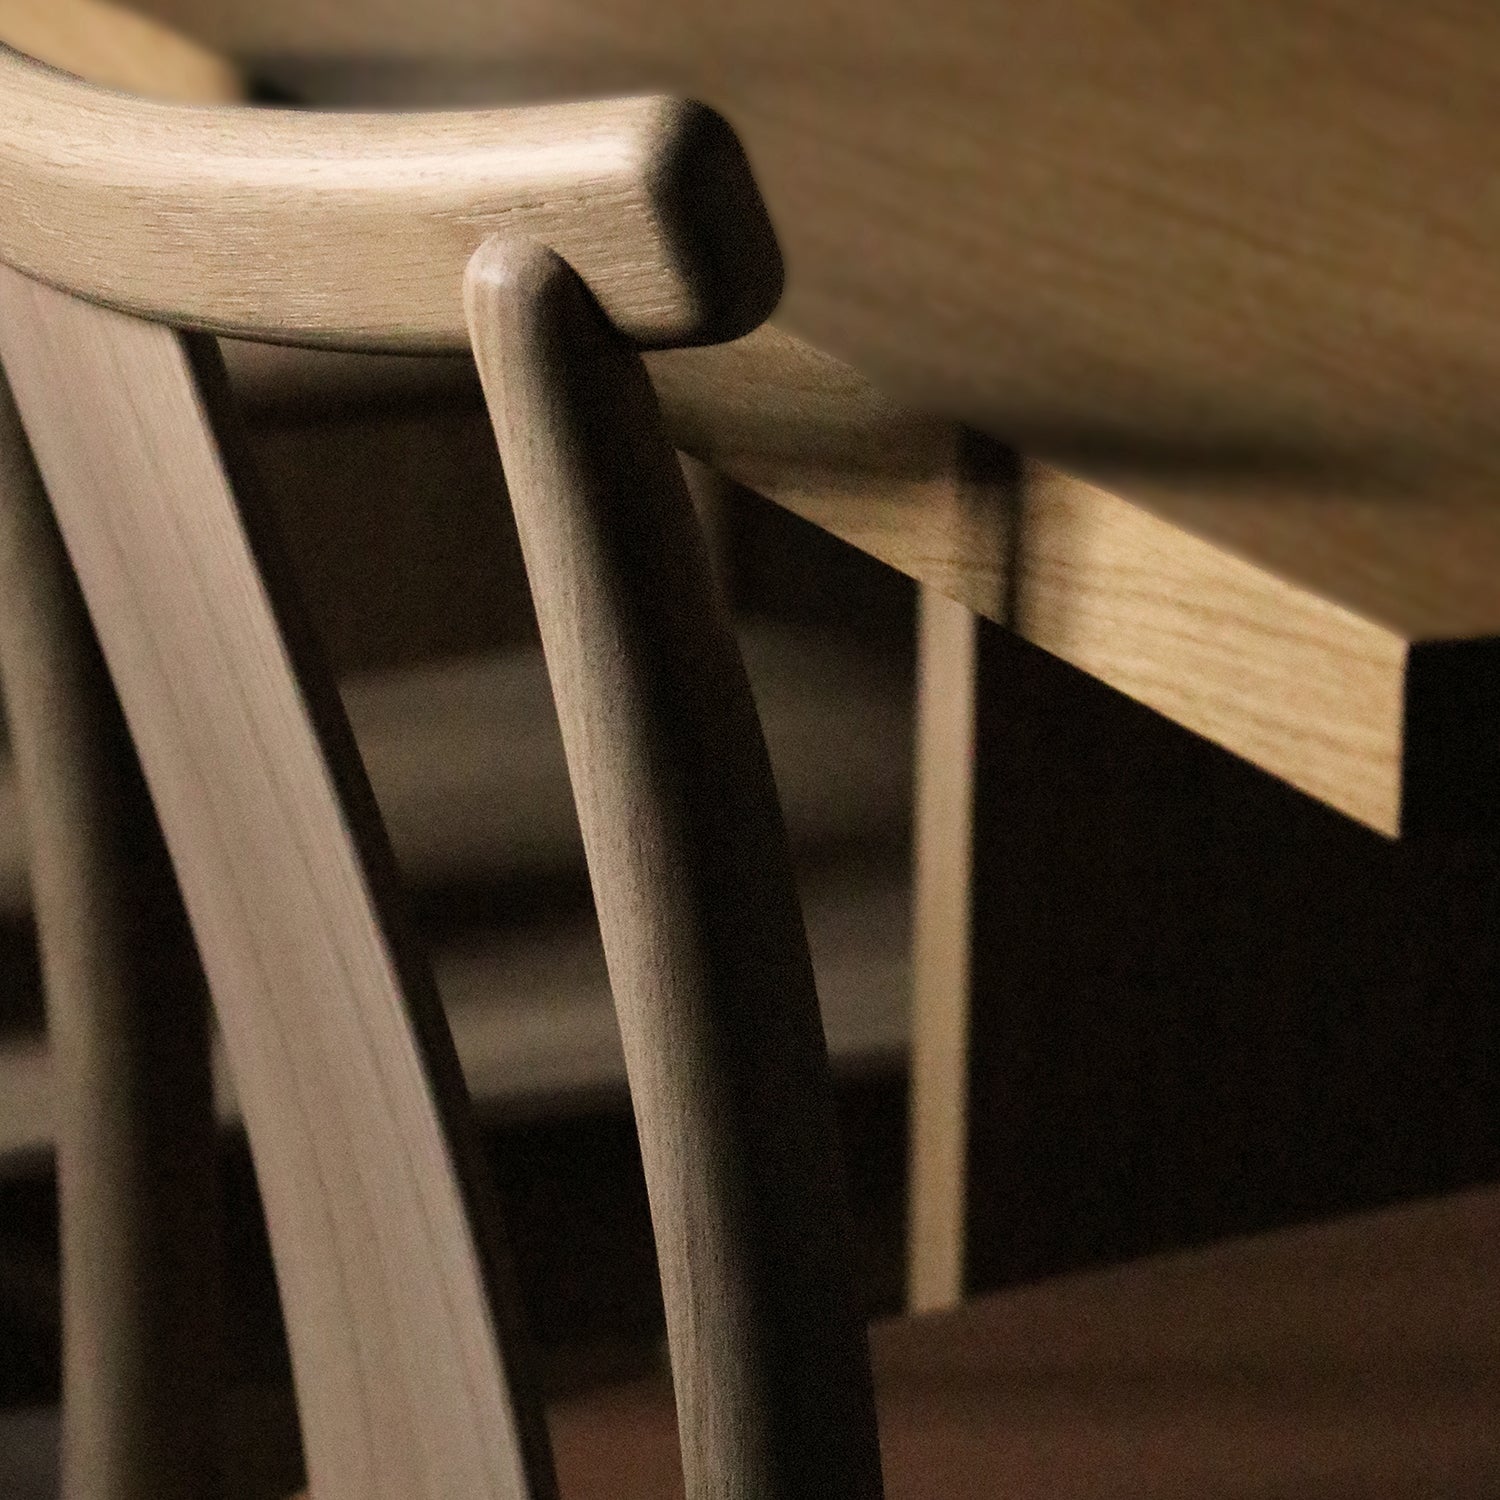 Merkur Dining Chair - The Design Choice